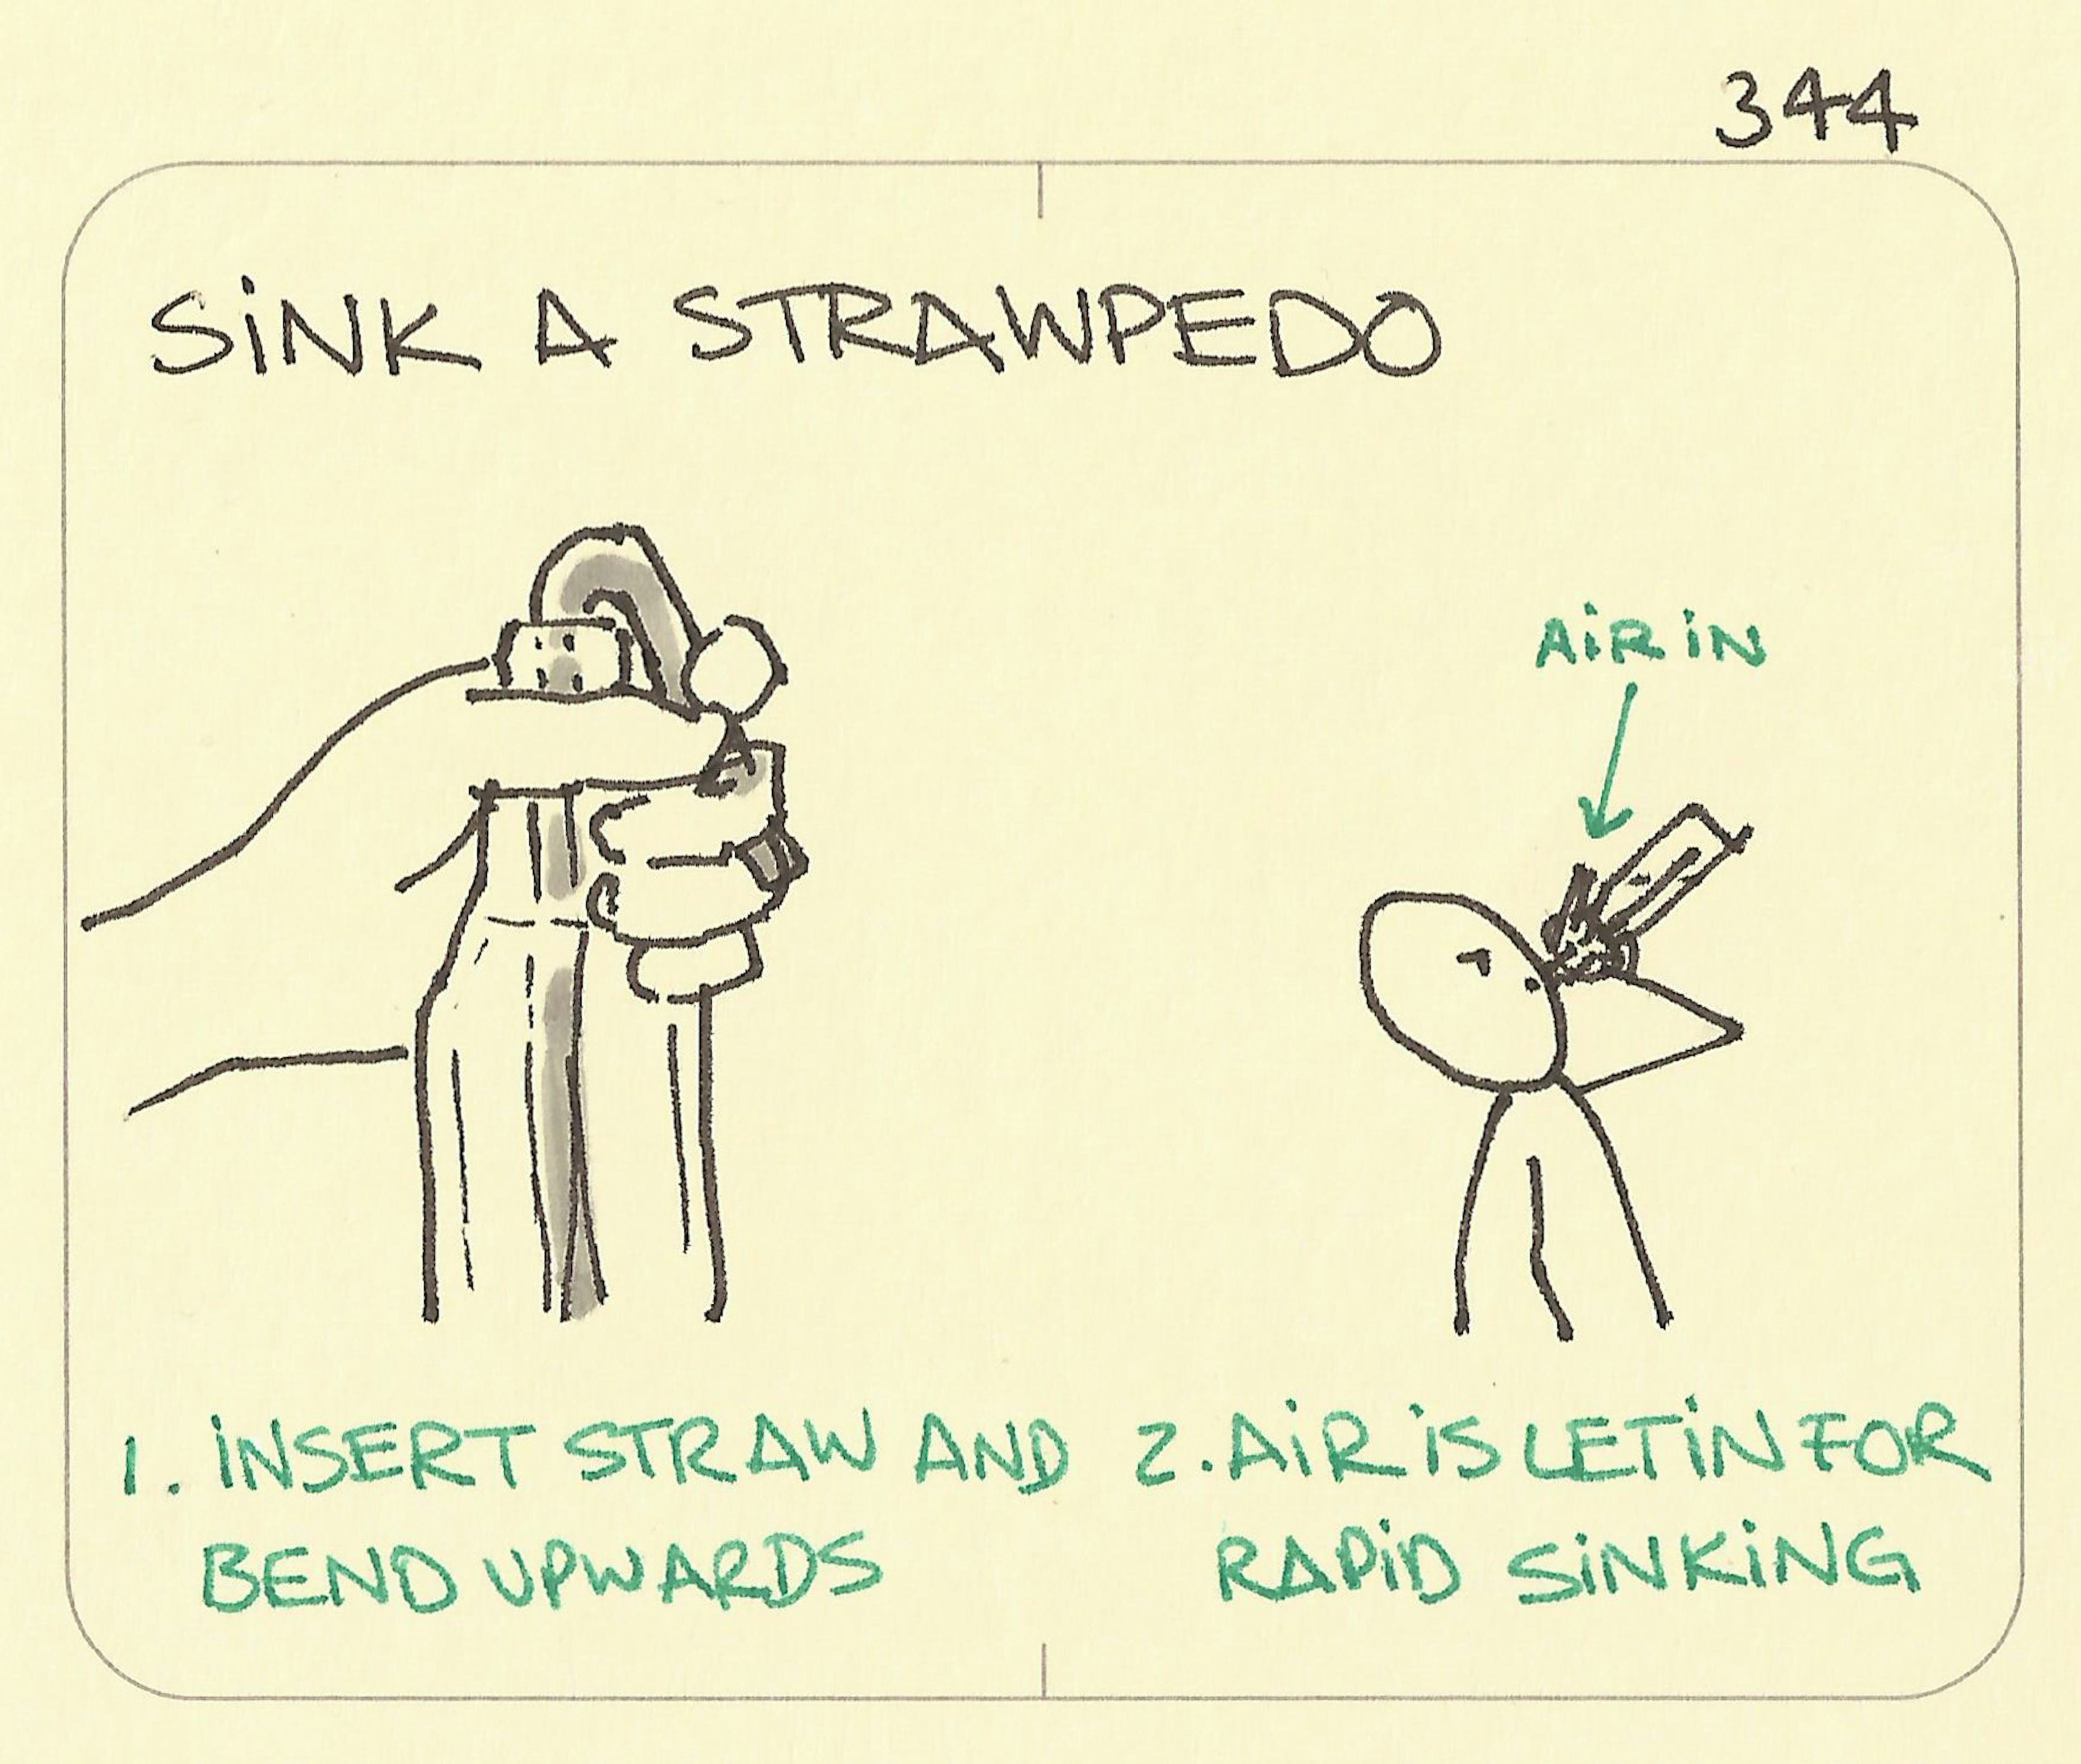 Sink a strawpedo - Sketchplanations